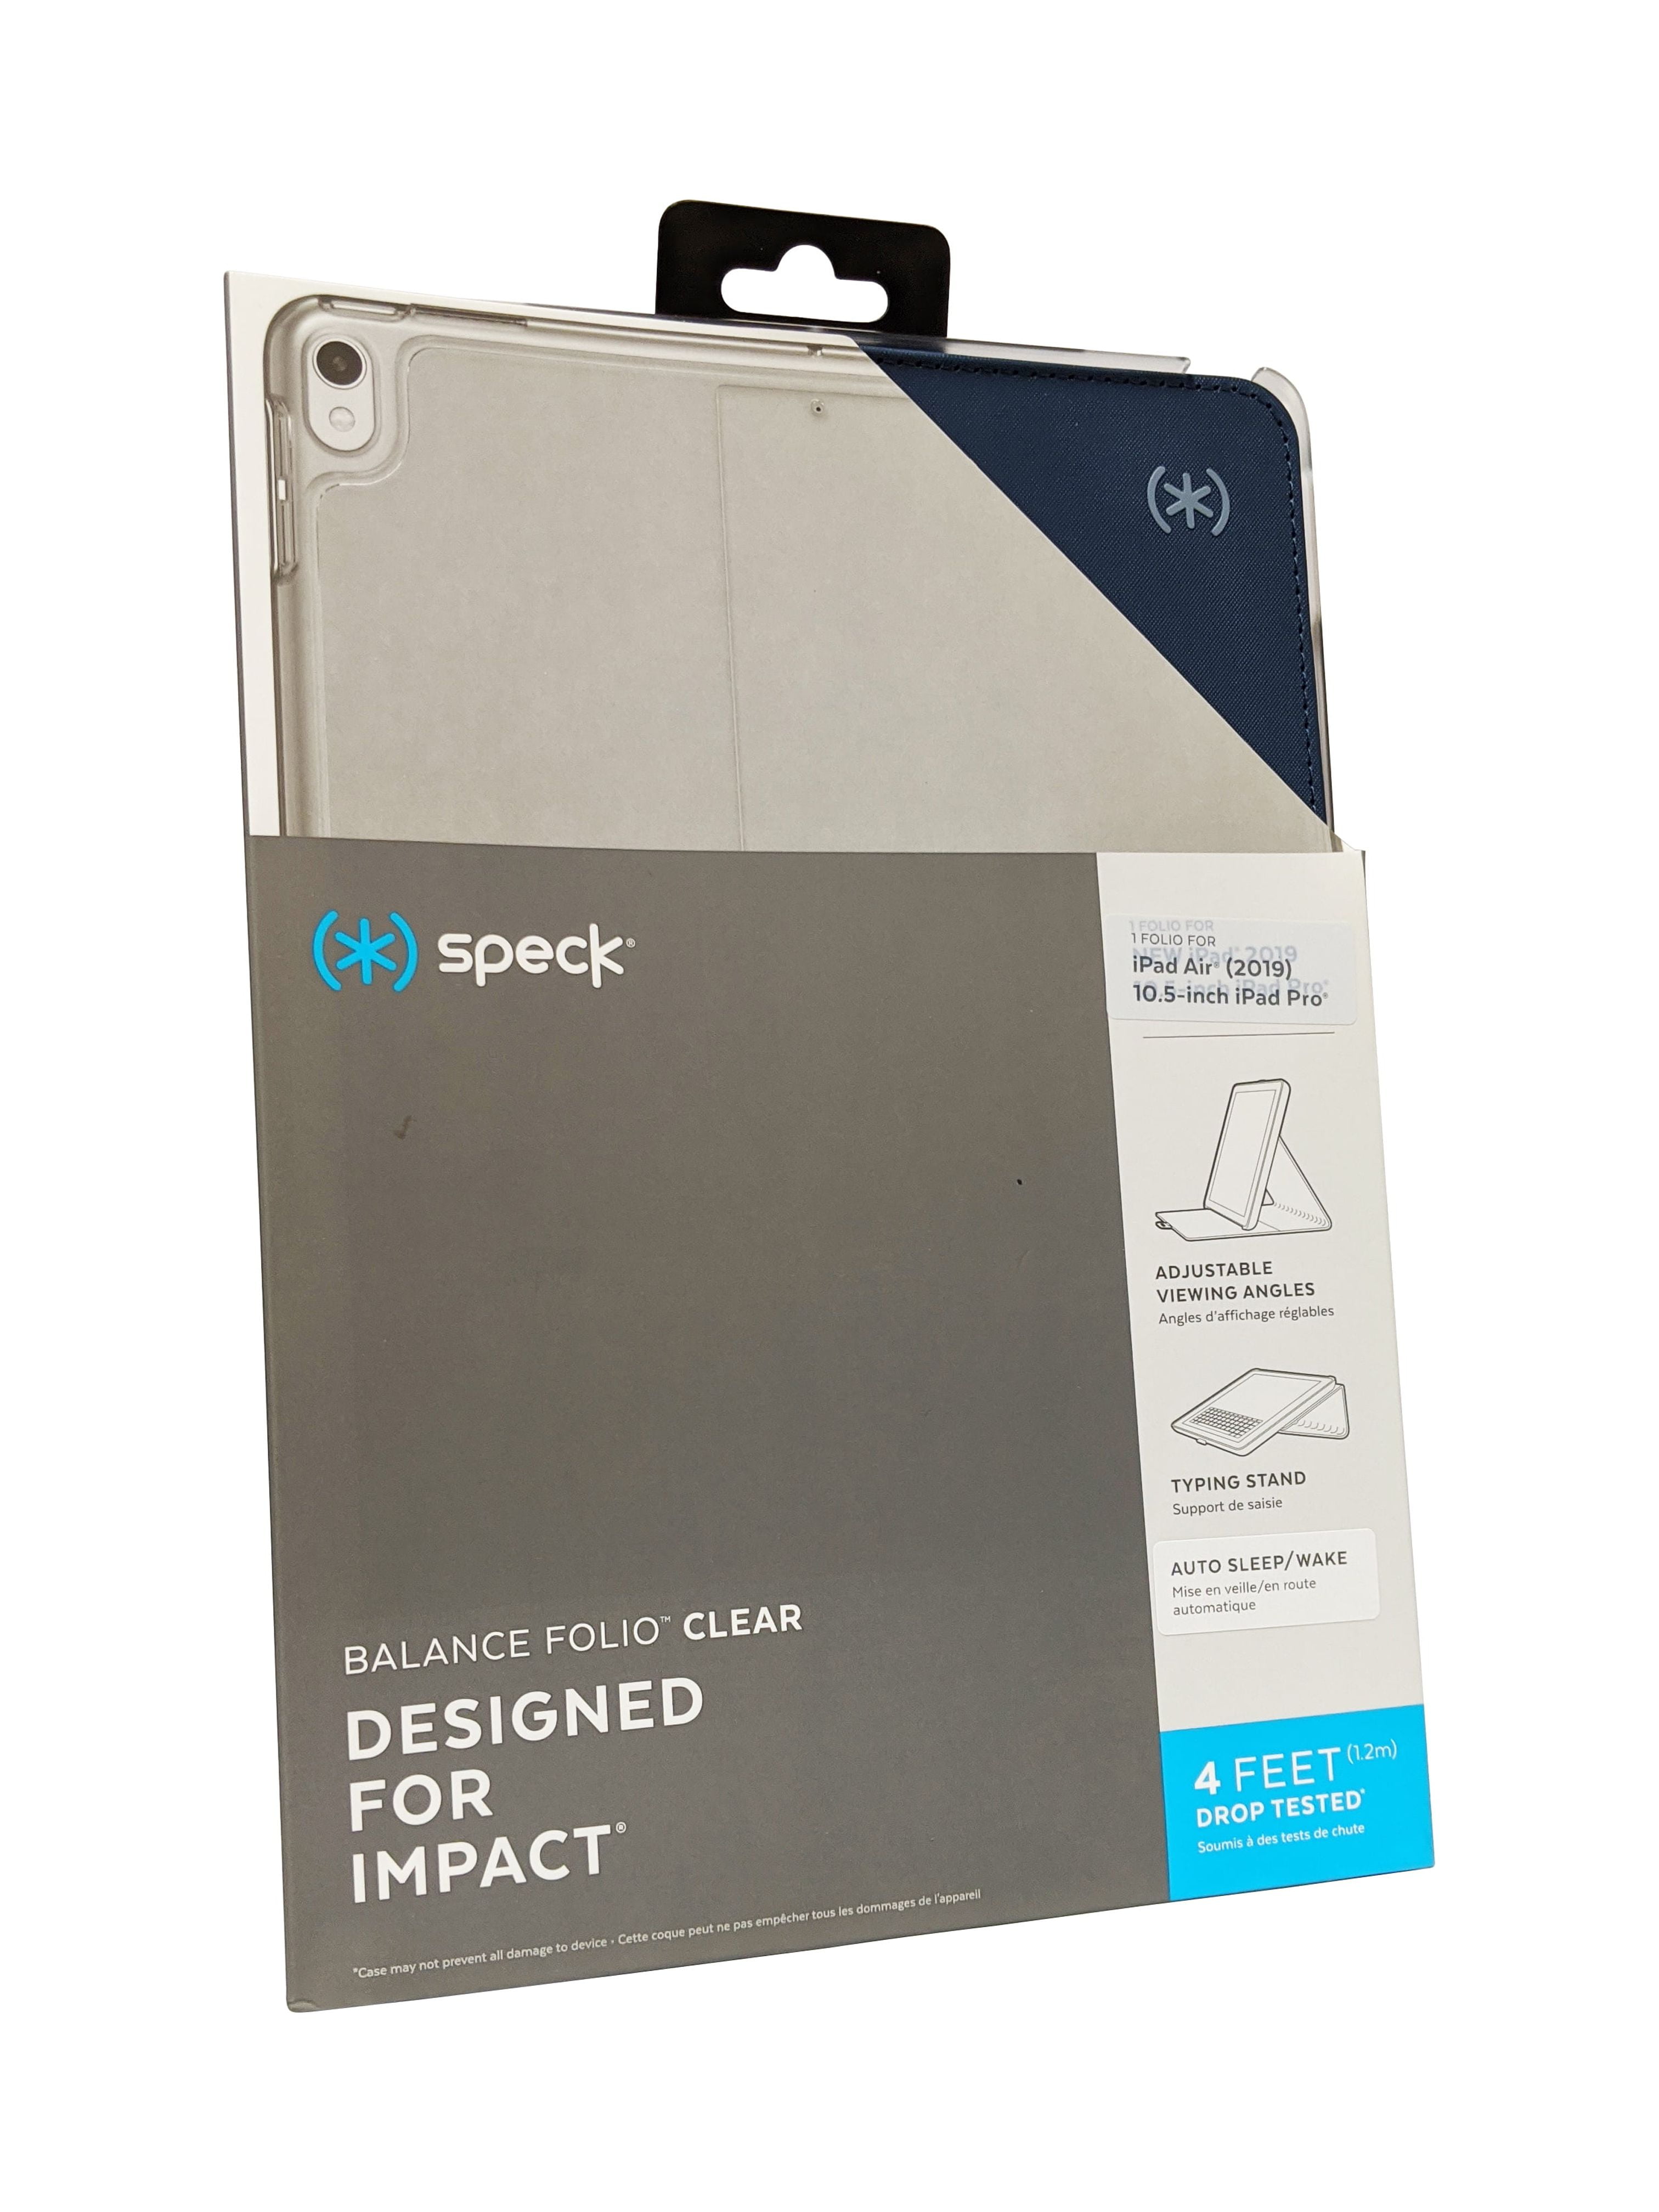 Coque de protection compatible avec iPad 10,2 et iPad Air 10,5